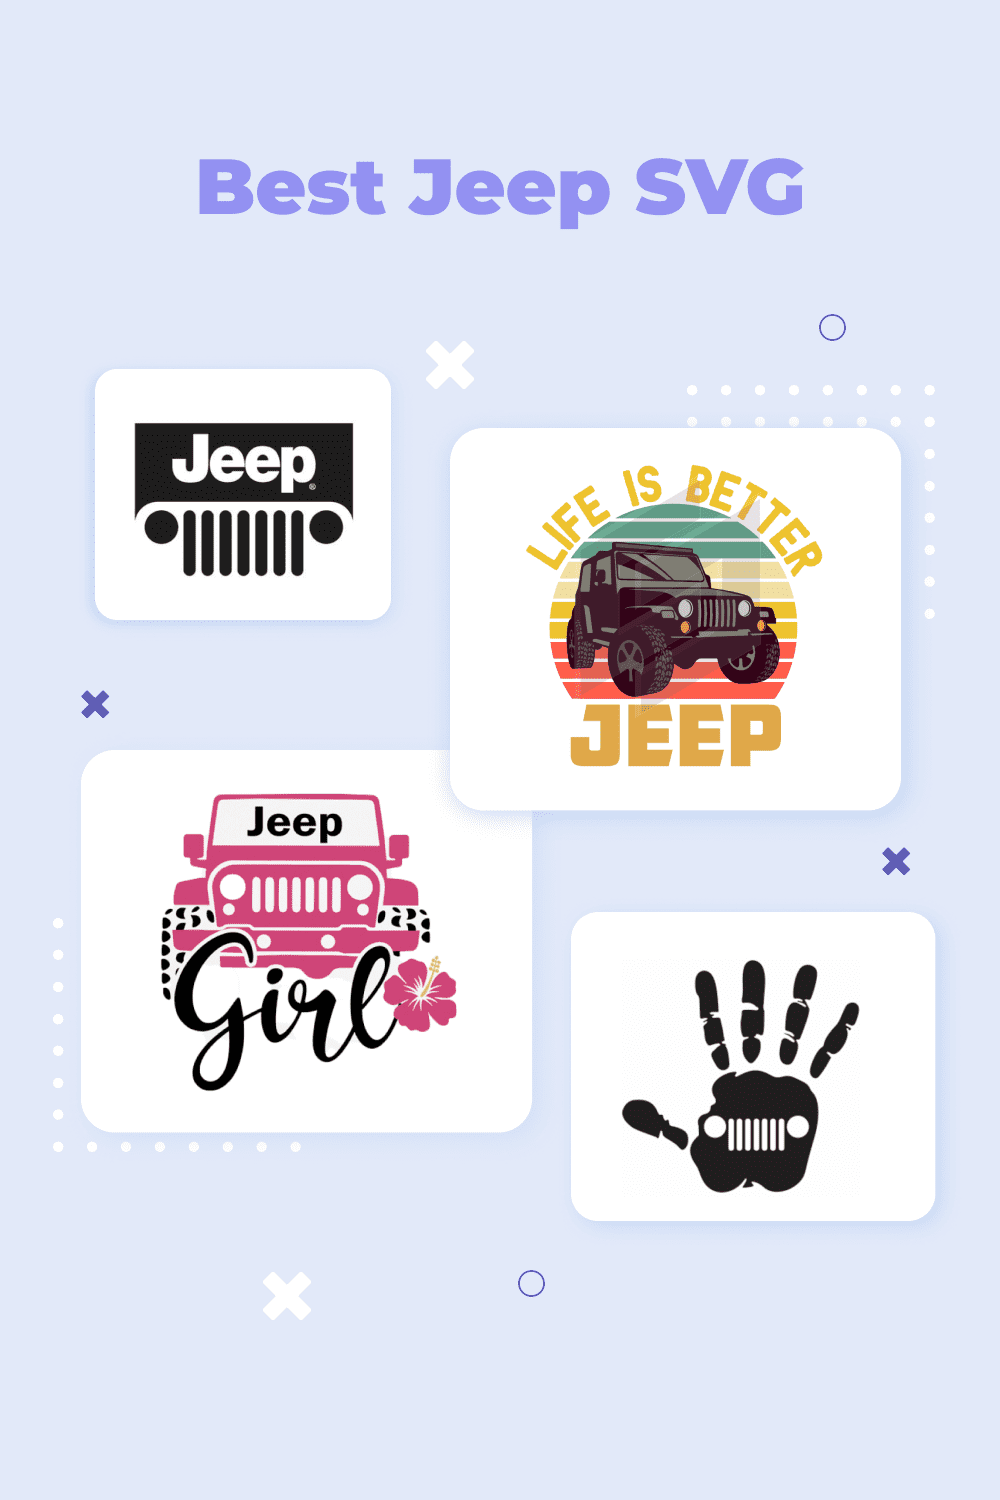 Best Jeep SVG Free and Premium Designs pinteerest collage.